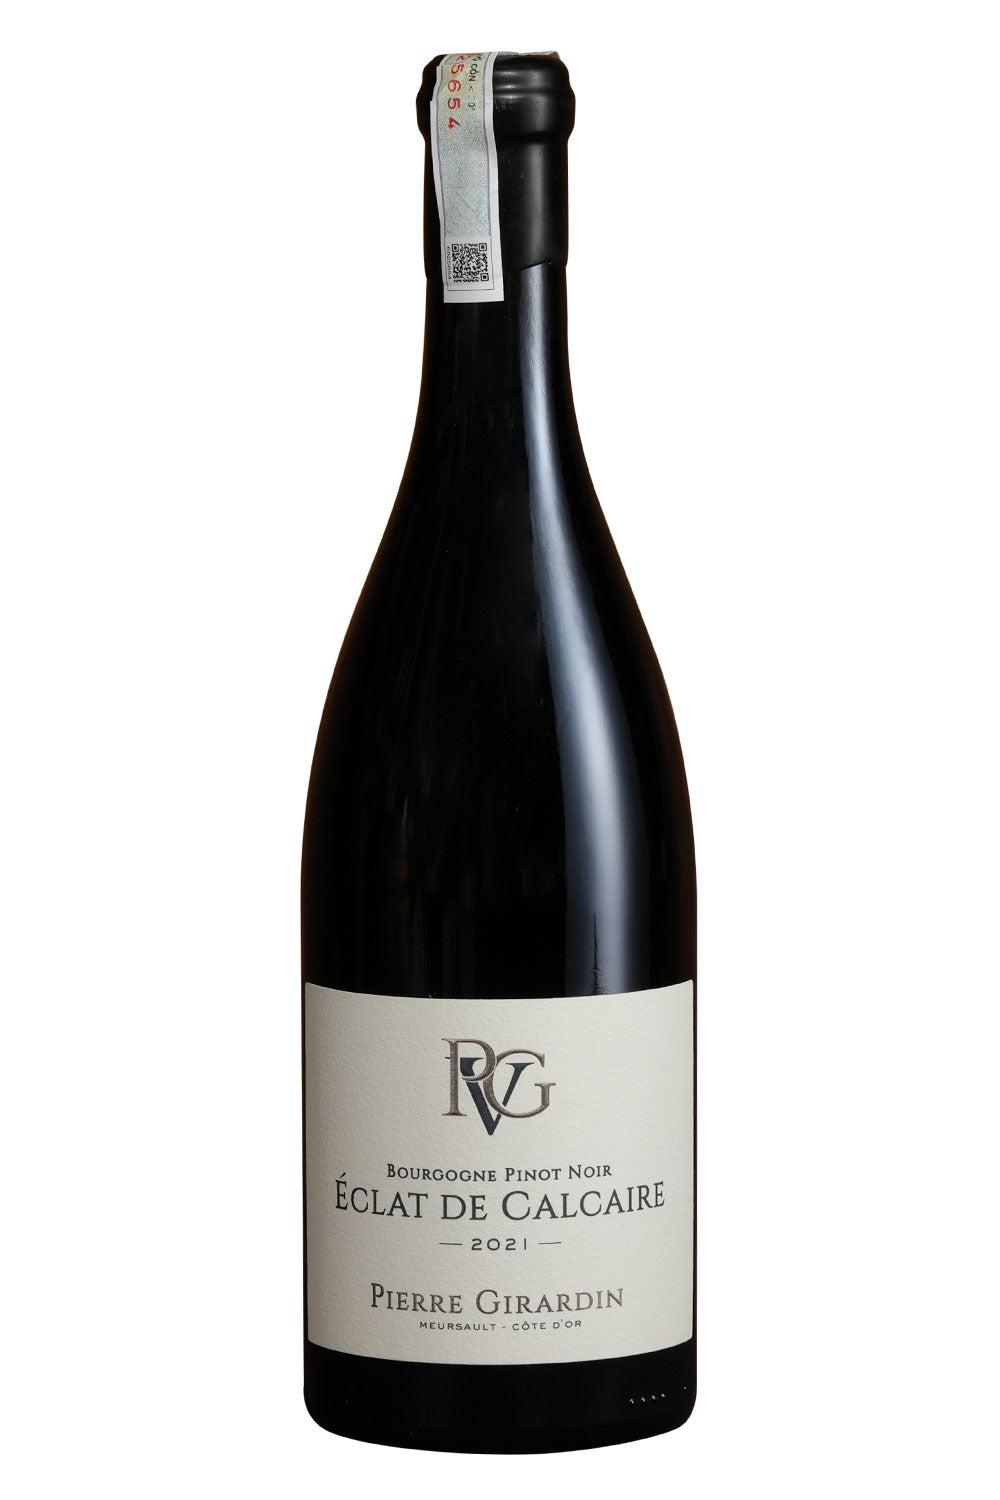 Pierre Girardin Bourgogne Pinot Noir Eclat de Calcaire